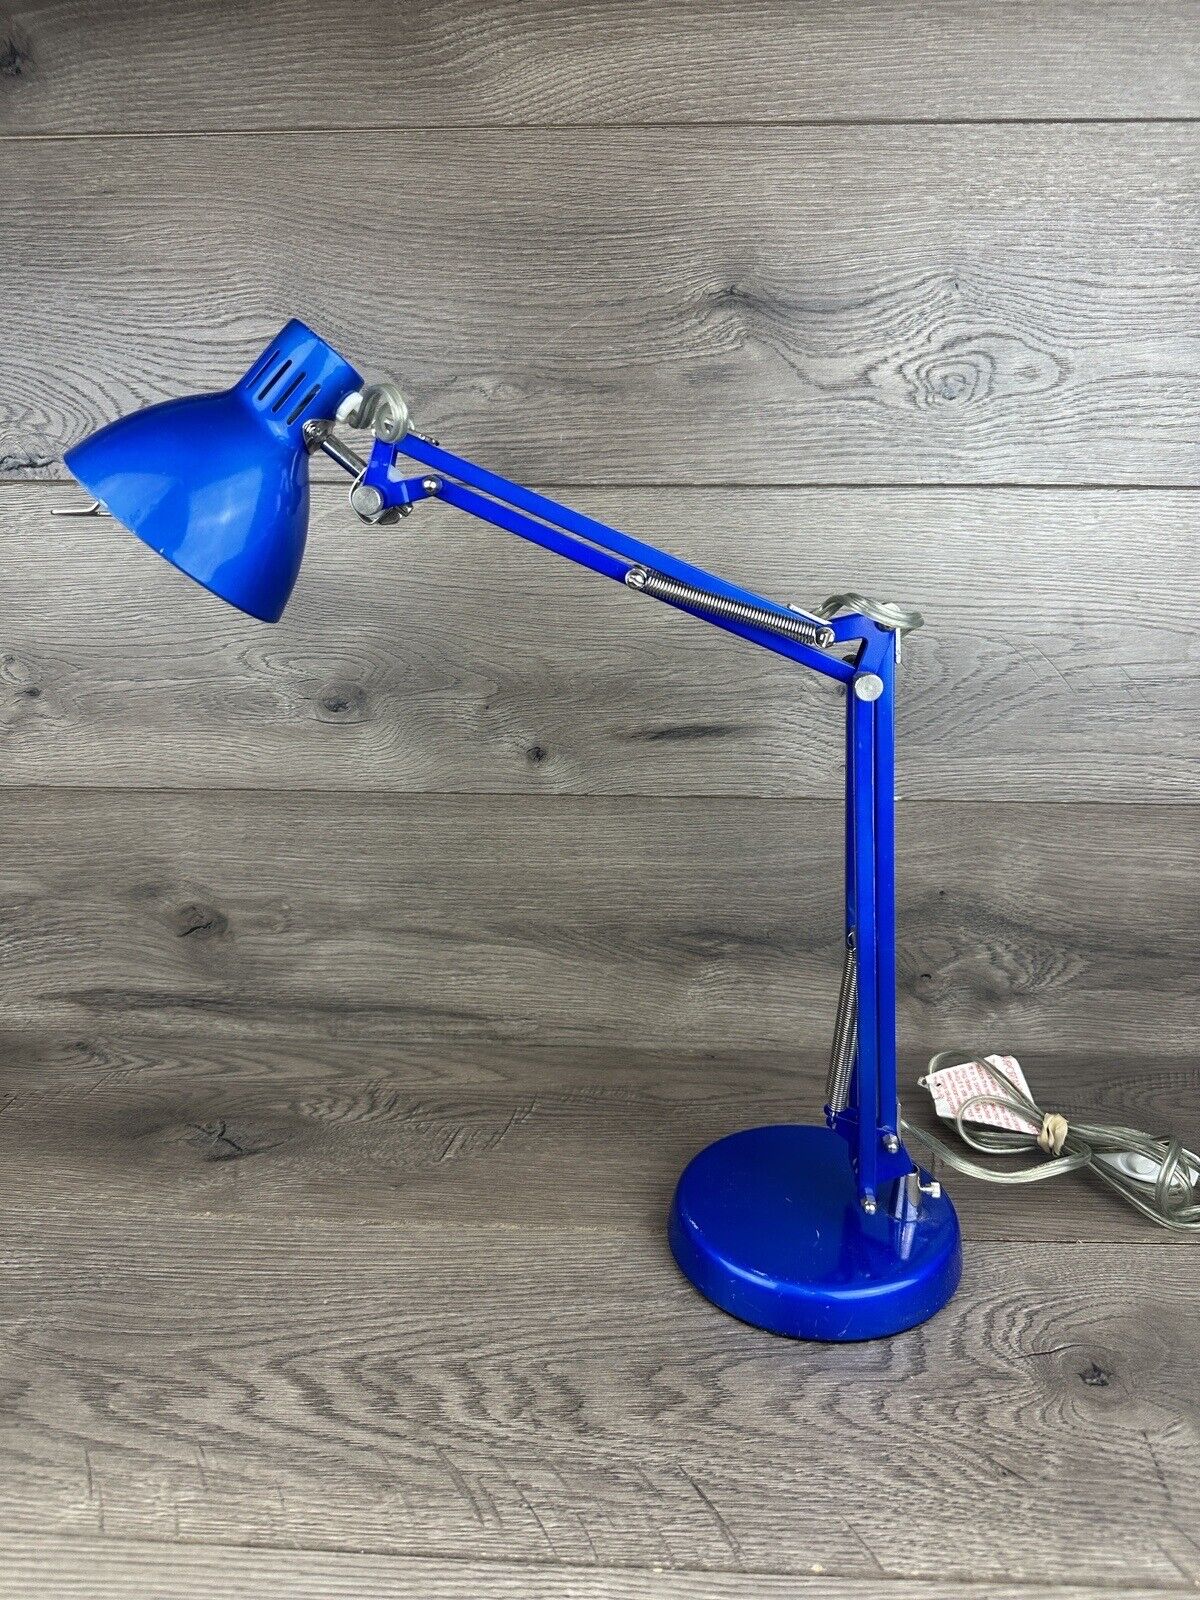 MCM Industrial Metal Architect Desk Lamp Articulating Adjustable Springs Blue